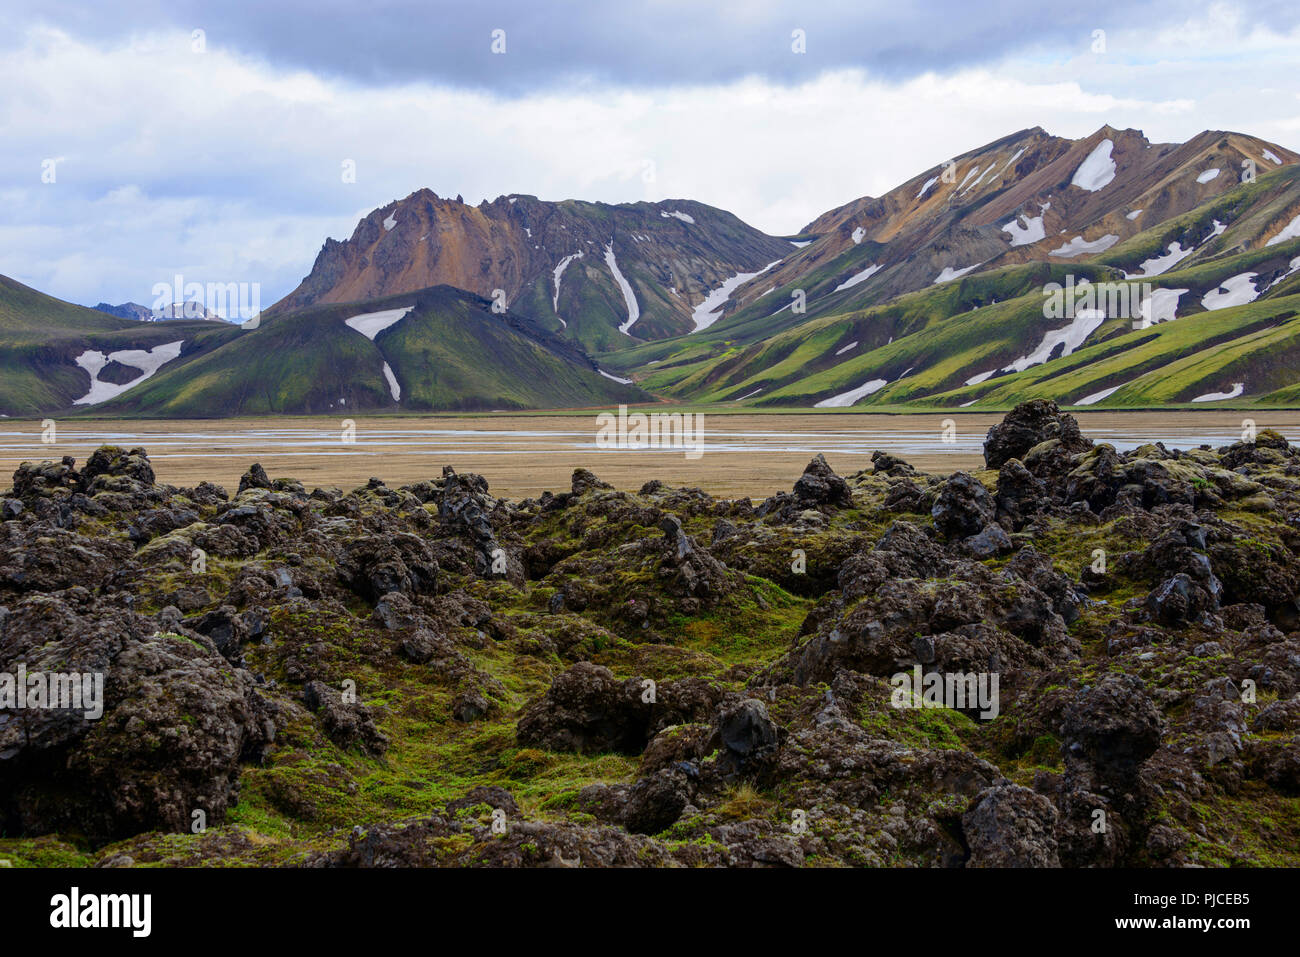 Flux de lave Laugahraun, Fjallabak Landmannalaugar, parc national, l'Islande, Lavastrom Laugahraun, Fjallabak Nationalpark, Island Banque D'Images